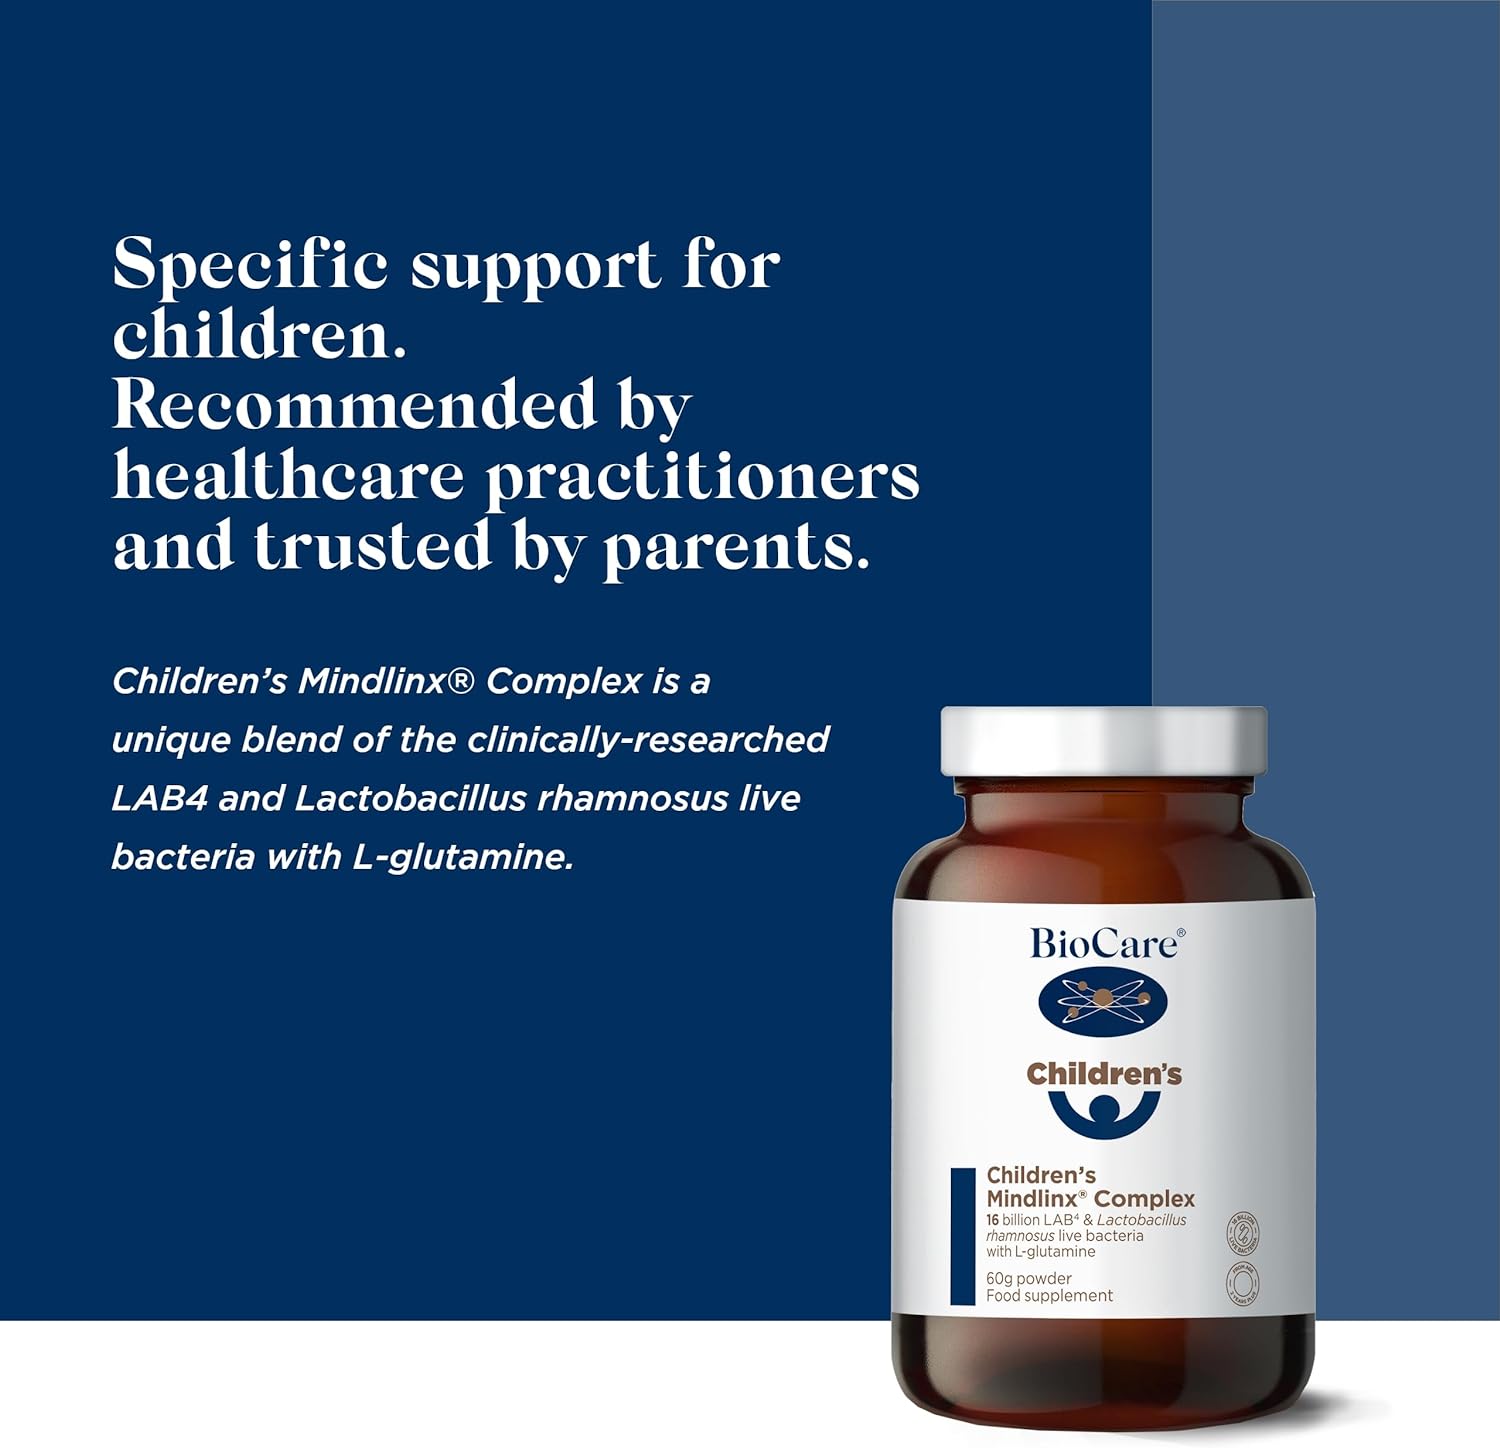 BioCare Childrens' Mindlinx® Powder 60g - MicroBio Health™